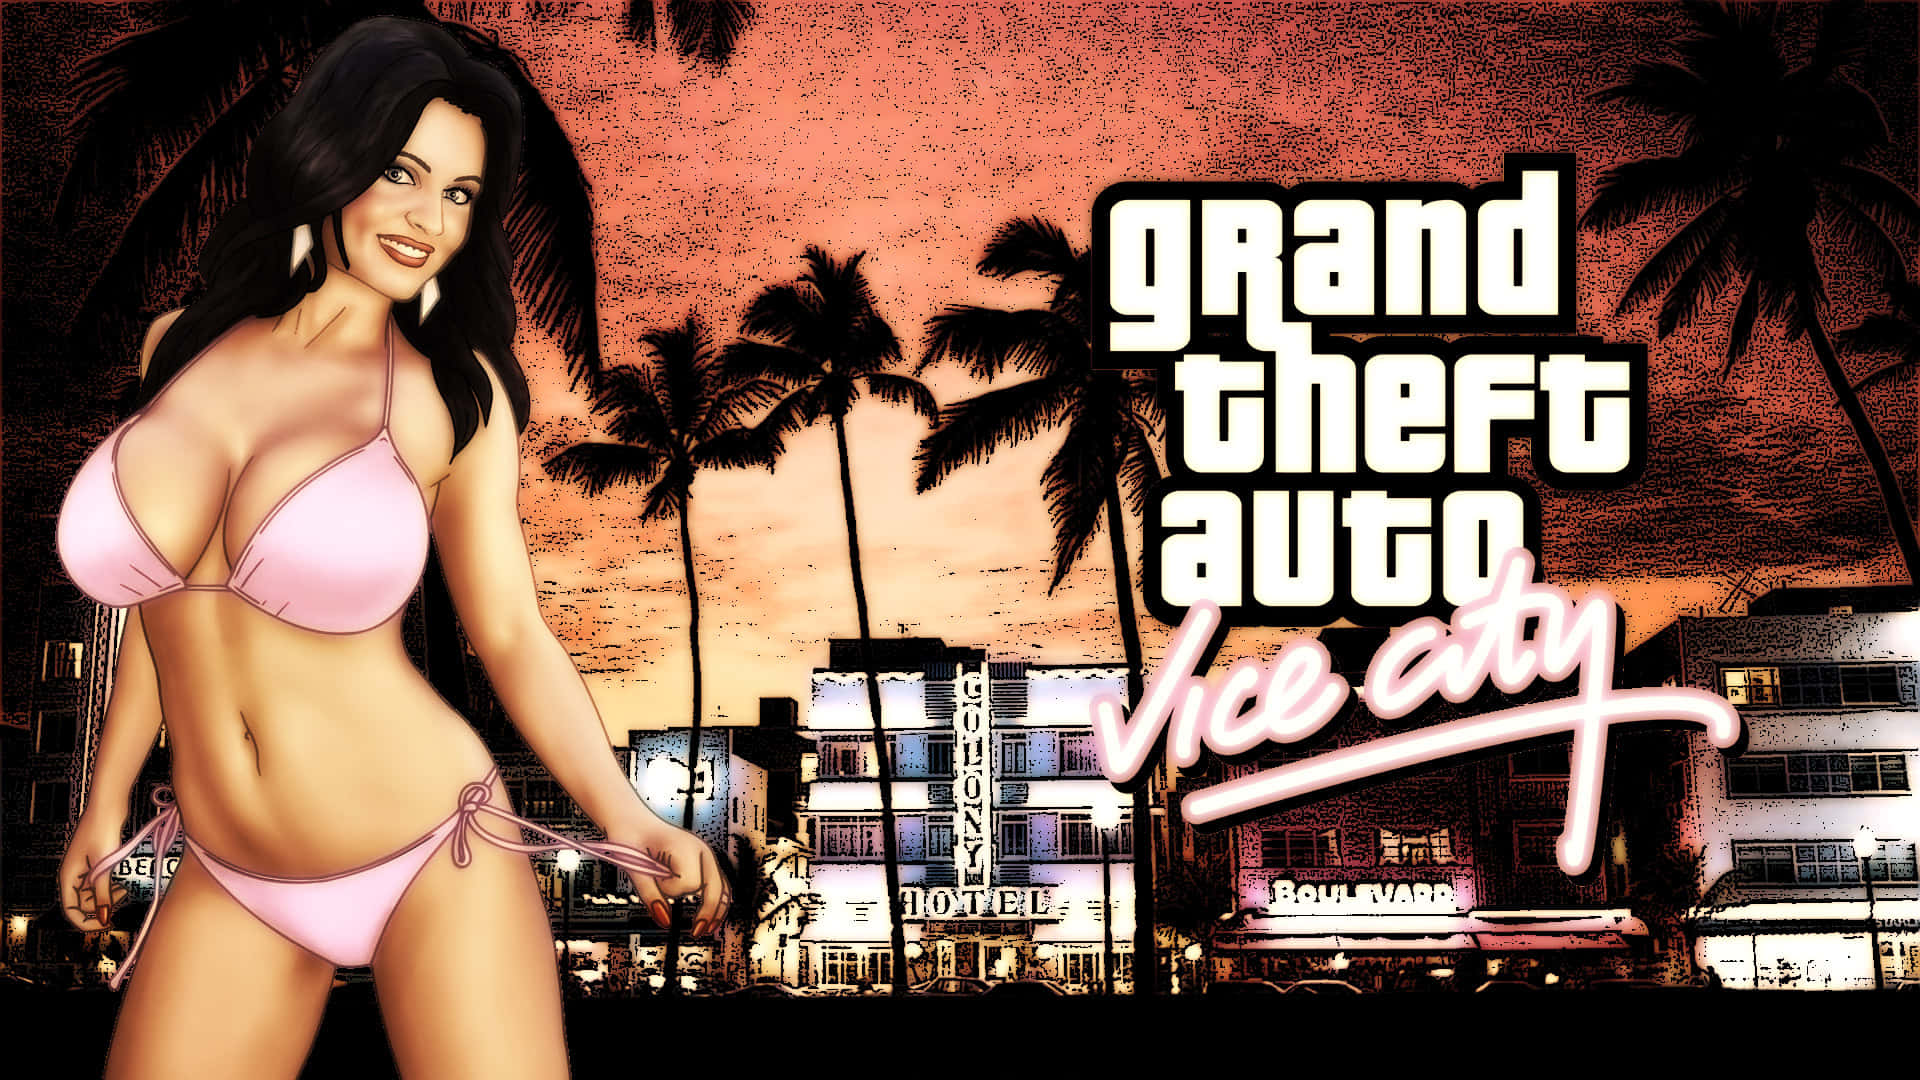 Grant Theft Auto Woman In Tanga Wallpaper